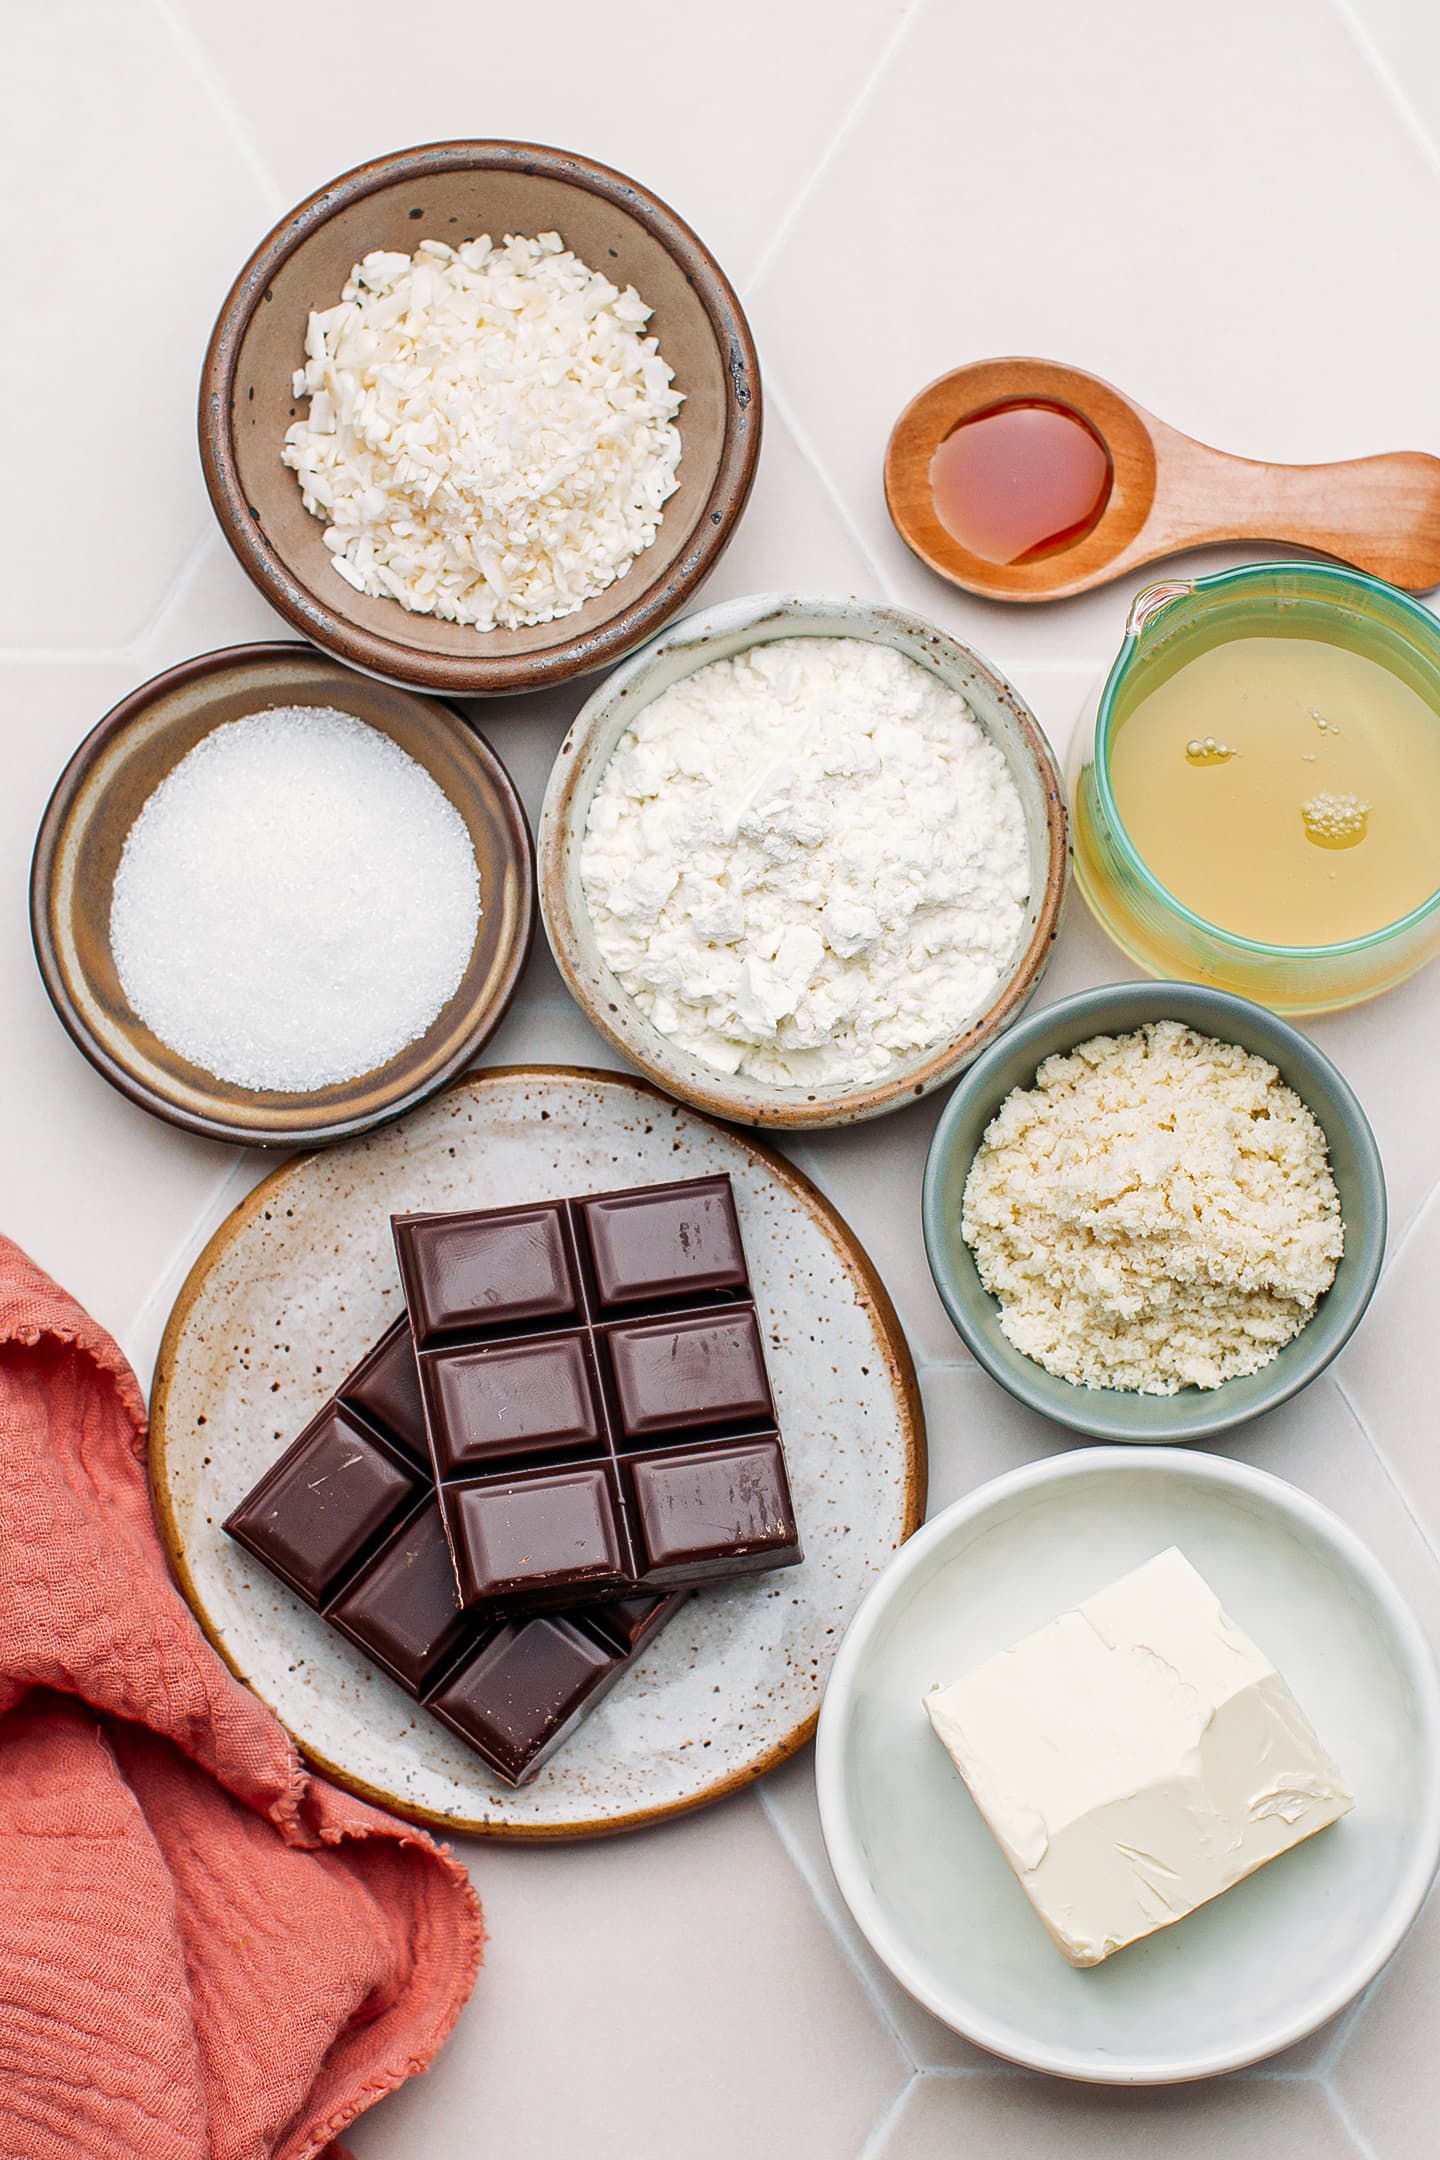 Ingredients like dark chocolate, flour, butter, almond flour, and sugar.